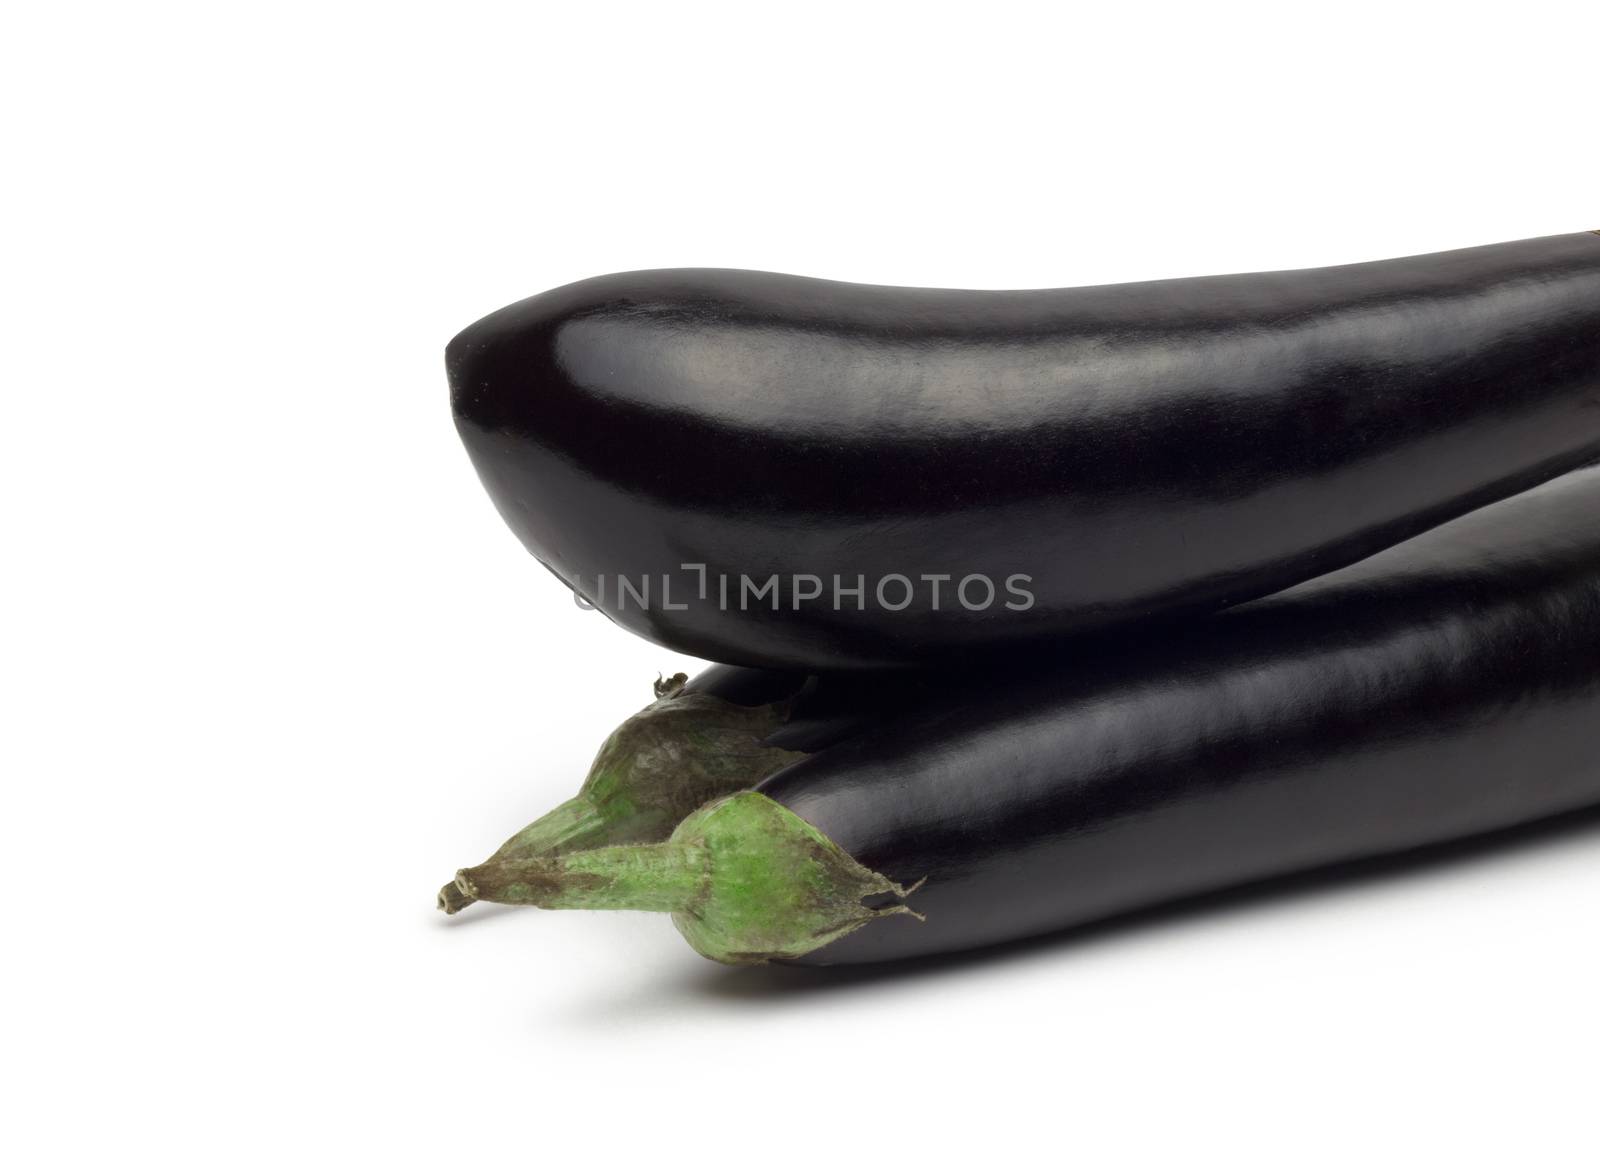 eggplant or aubergine vegetable by ozaiachin